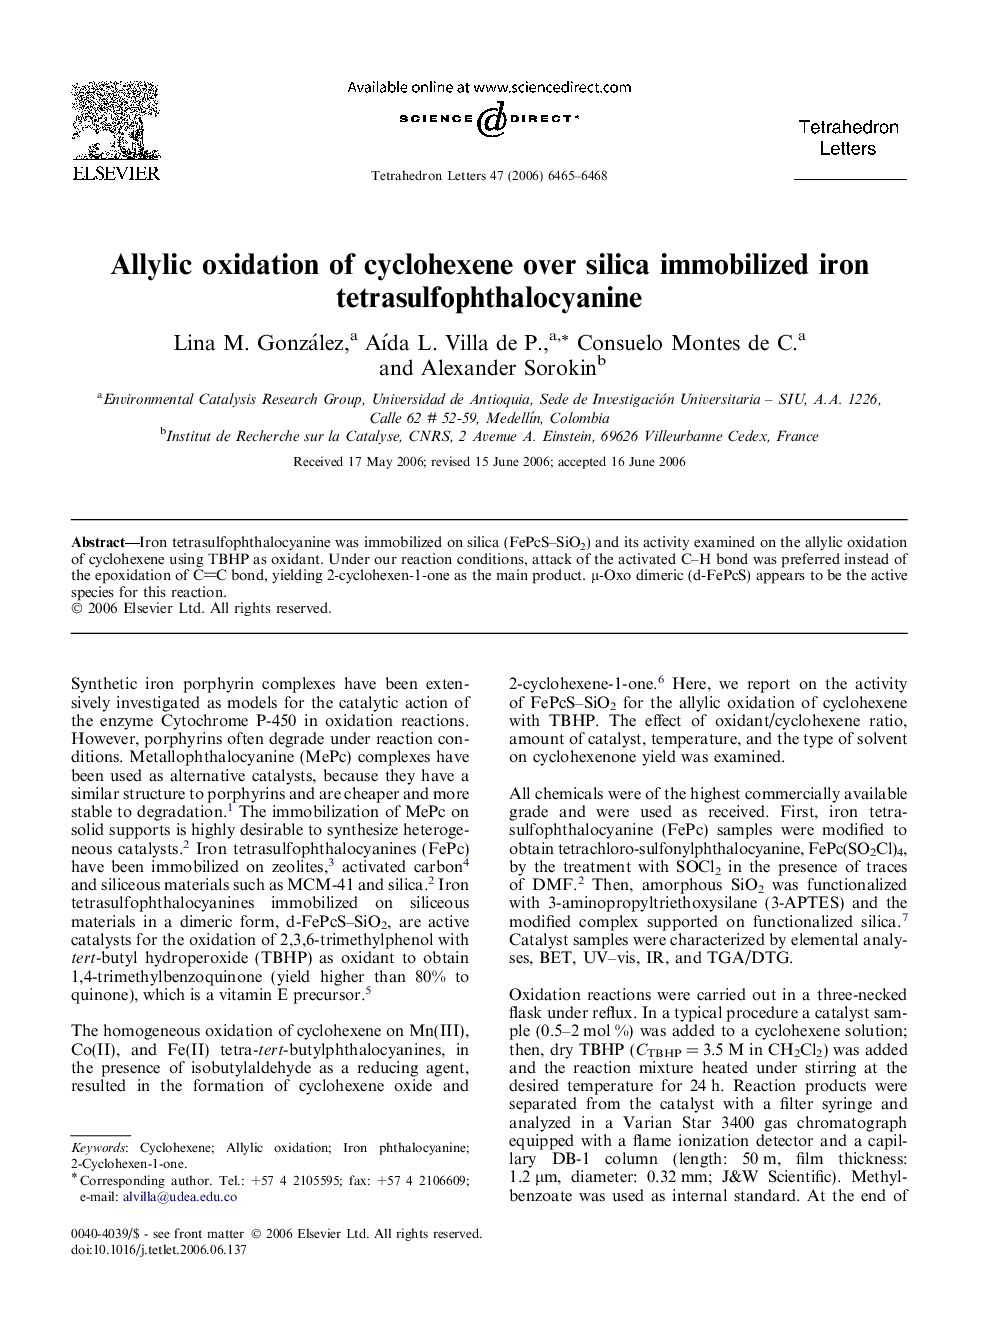 Allylic oxidation of cyclohexene over silica immobilized iron tetrasulfophthalocyanine